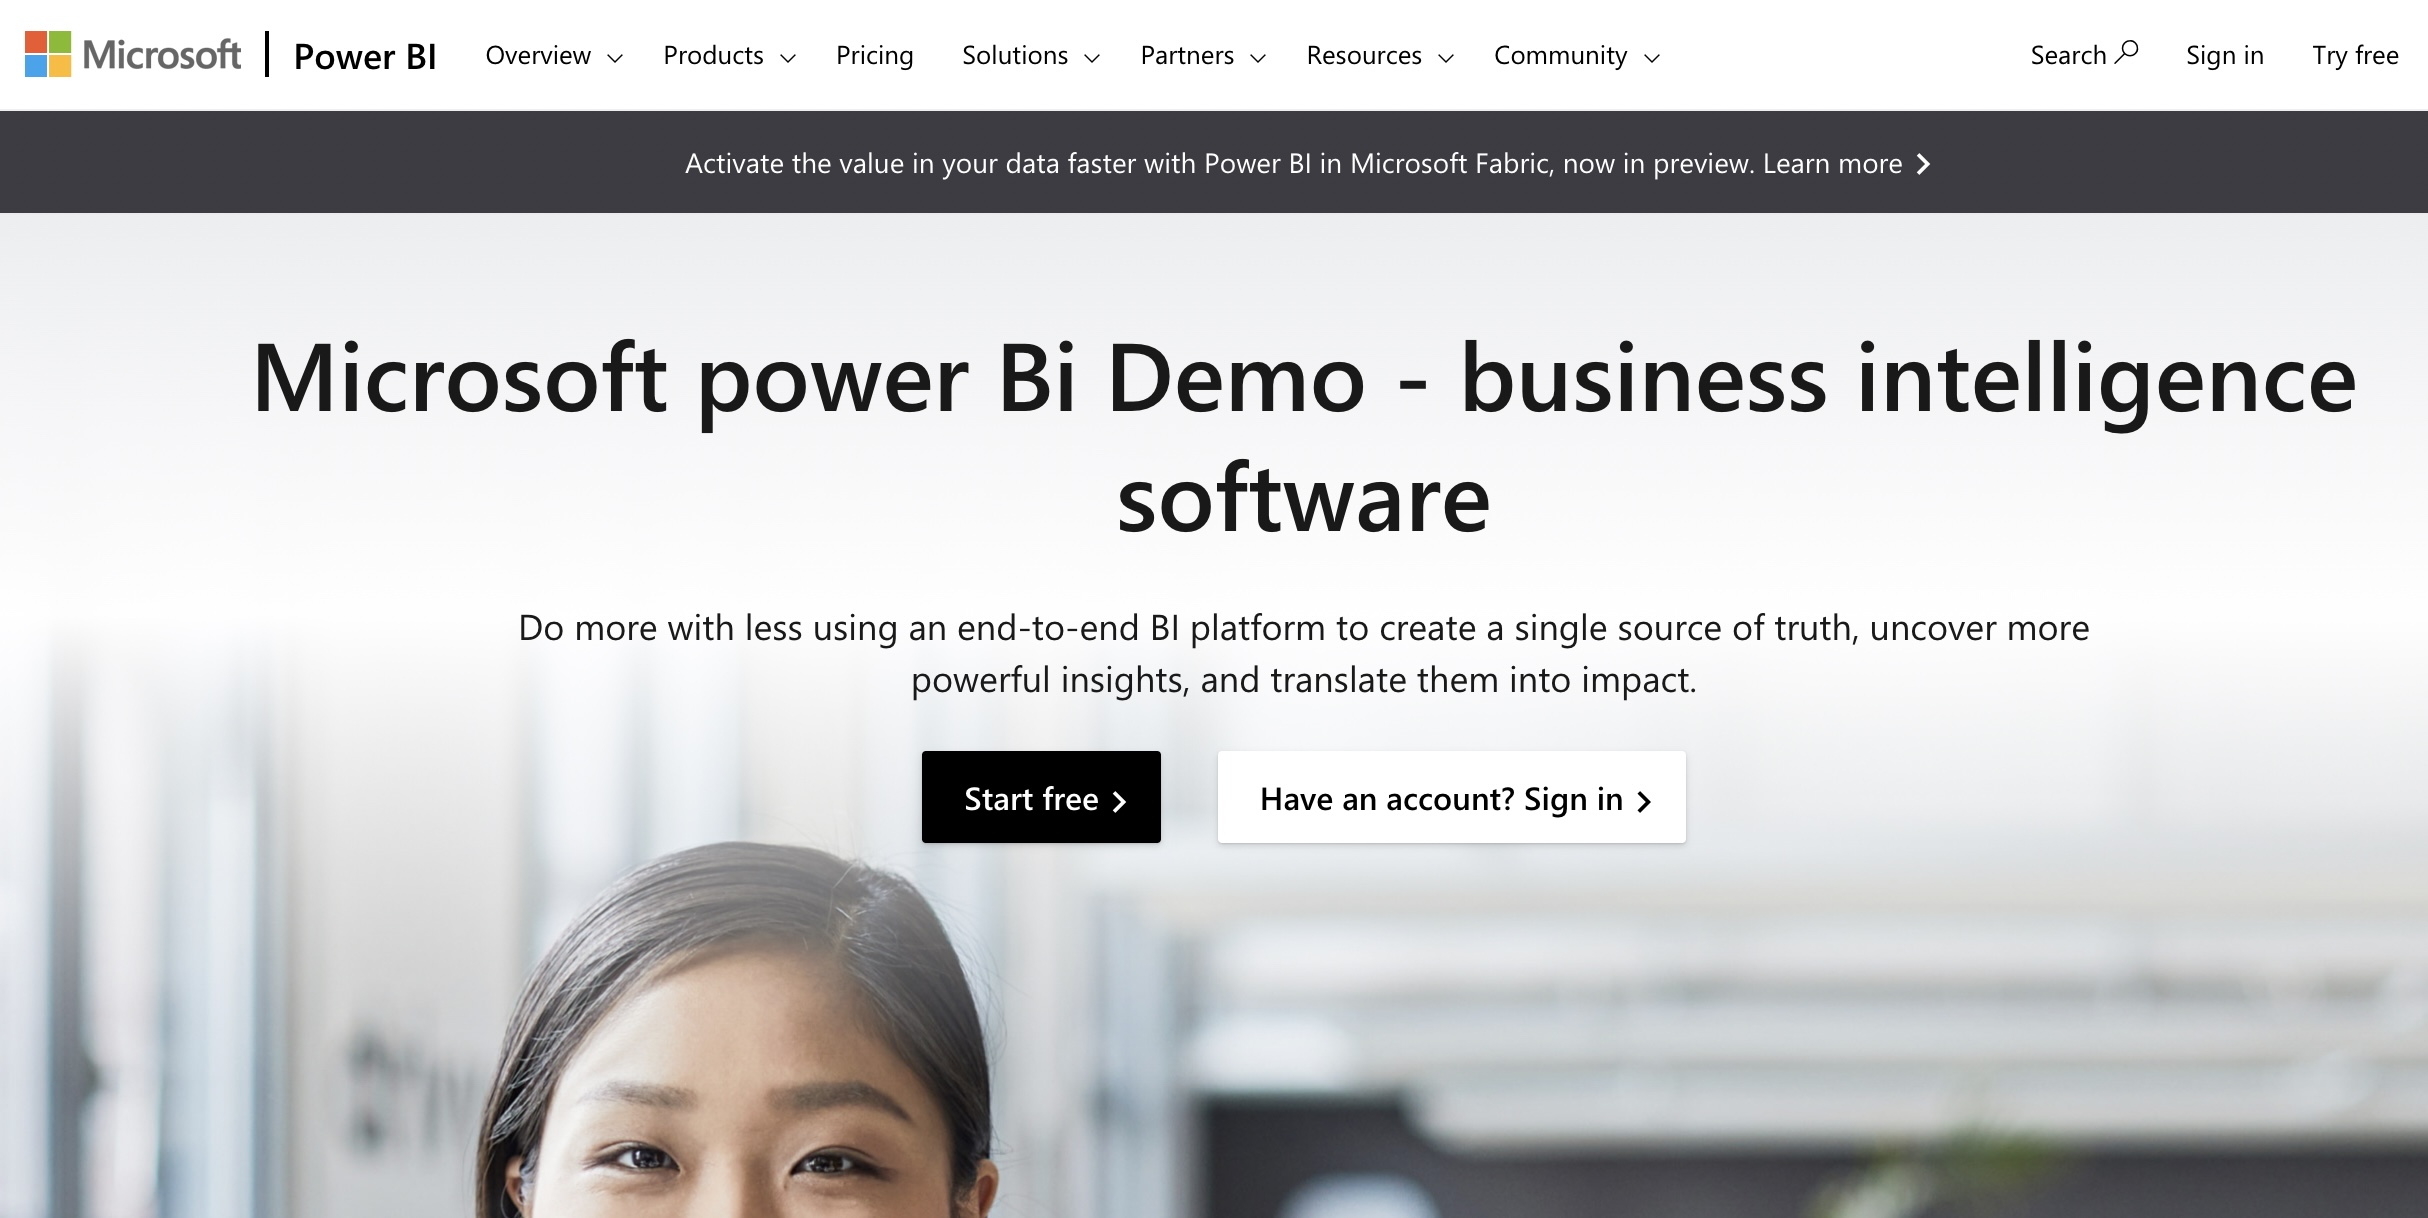 Microsoft-power-Bi-Demo-business-intelligence-software